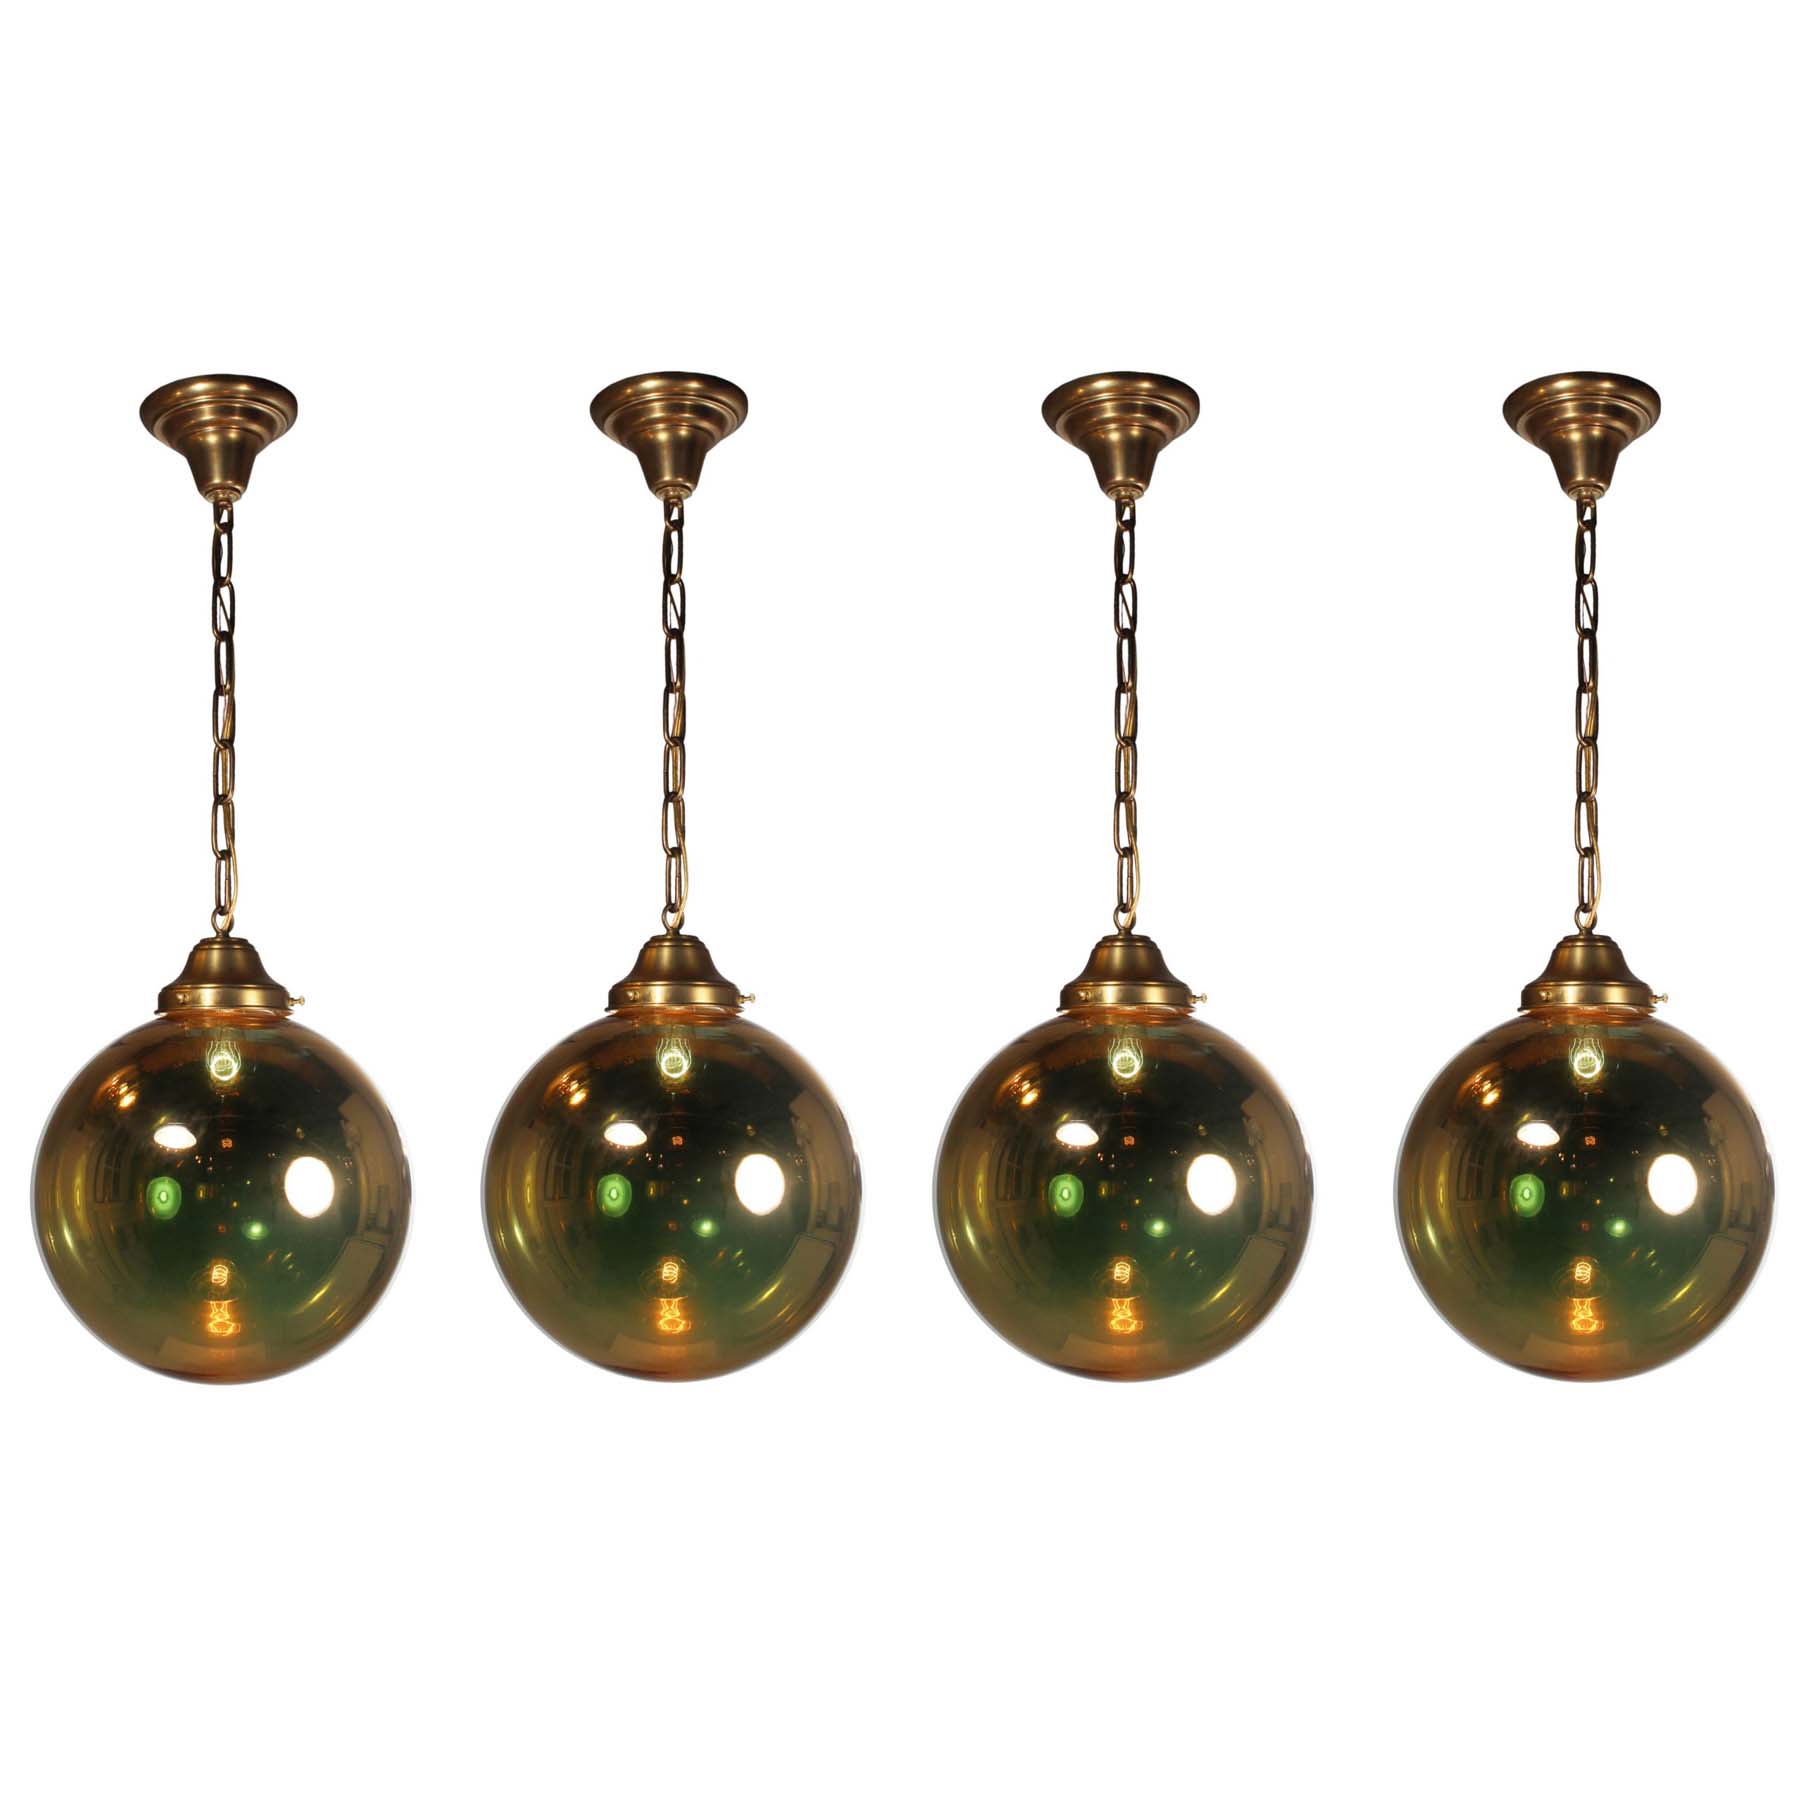 SOLD Mirrored Glass Ball Pendant Lights, Vintage Lighting-0